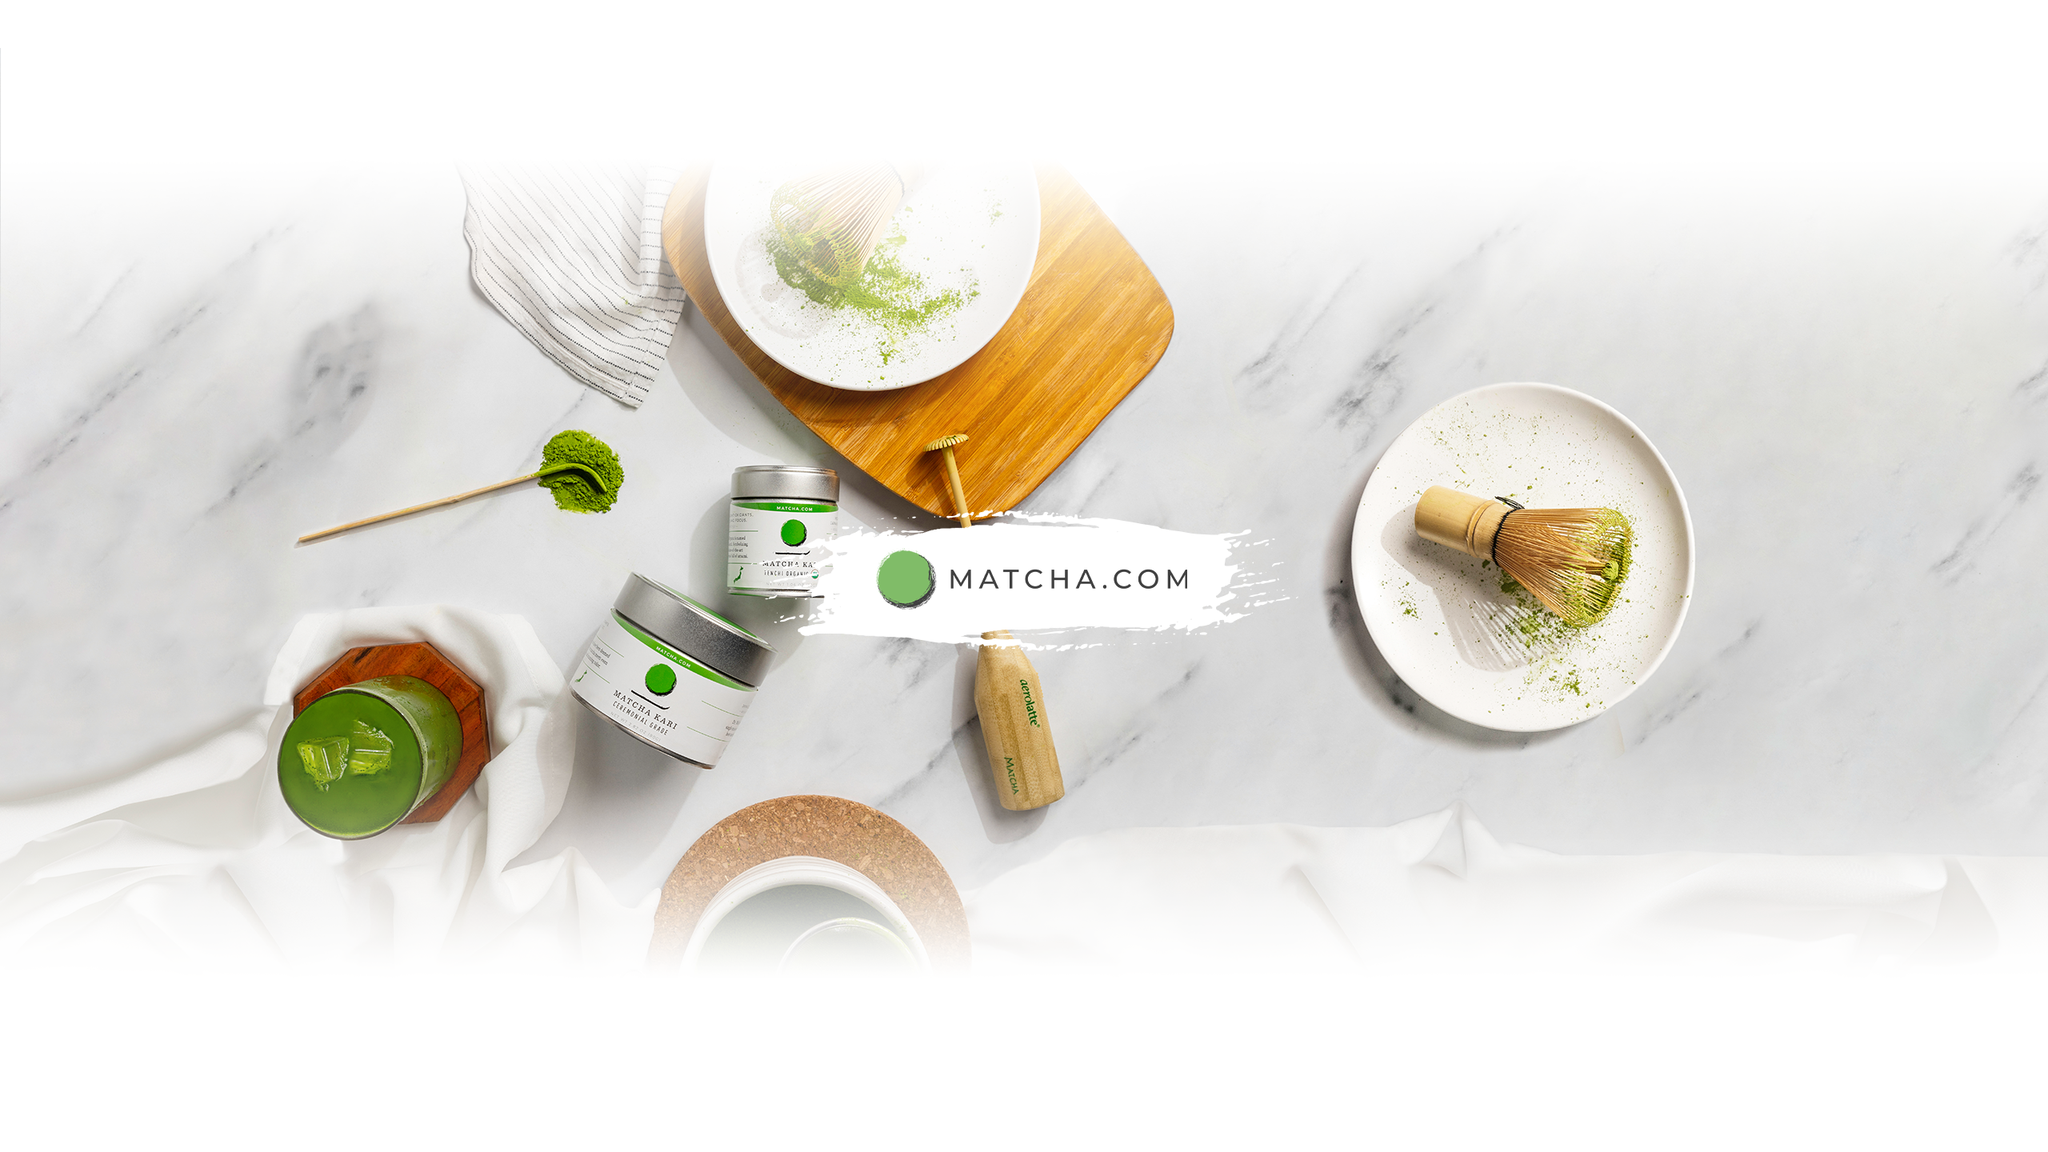 Matcha.com